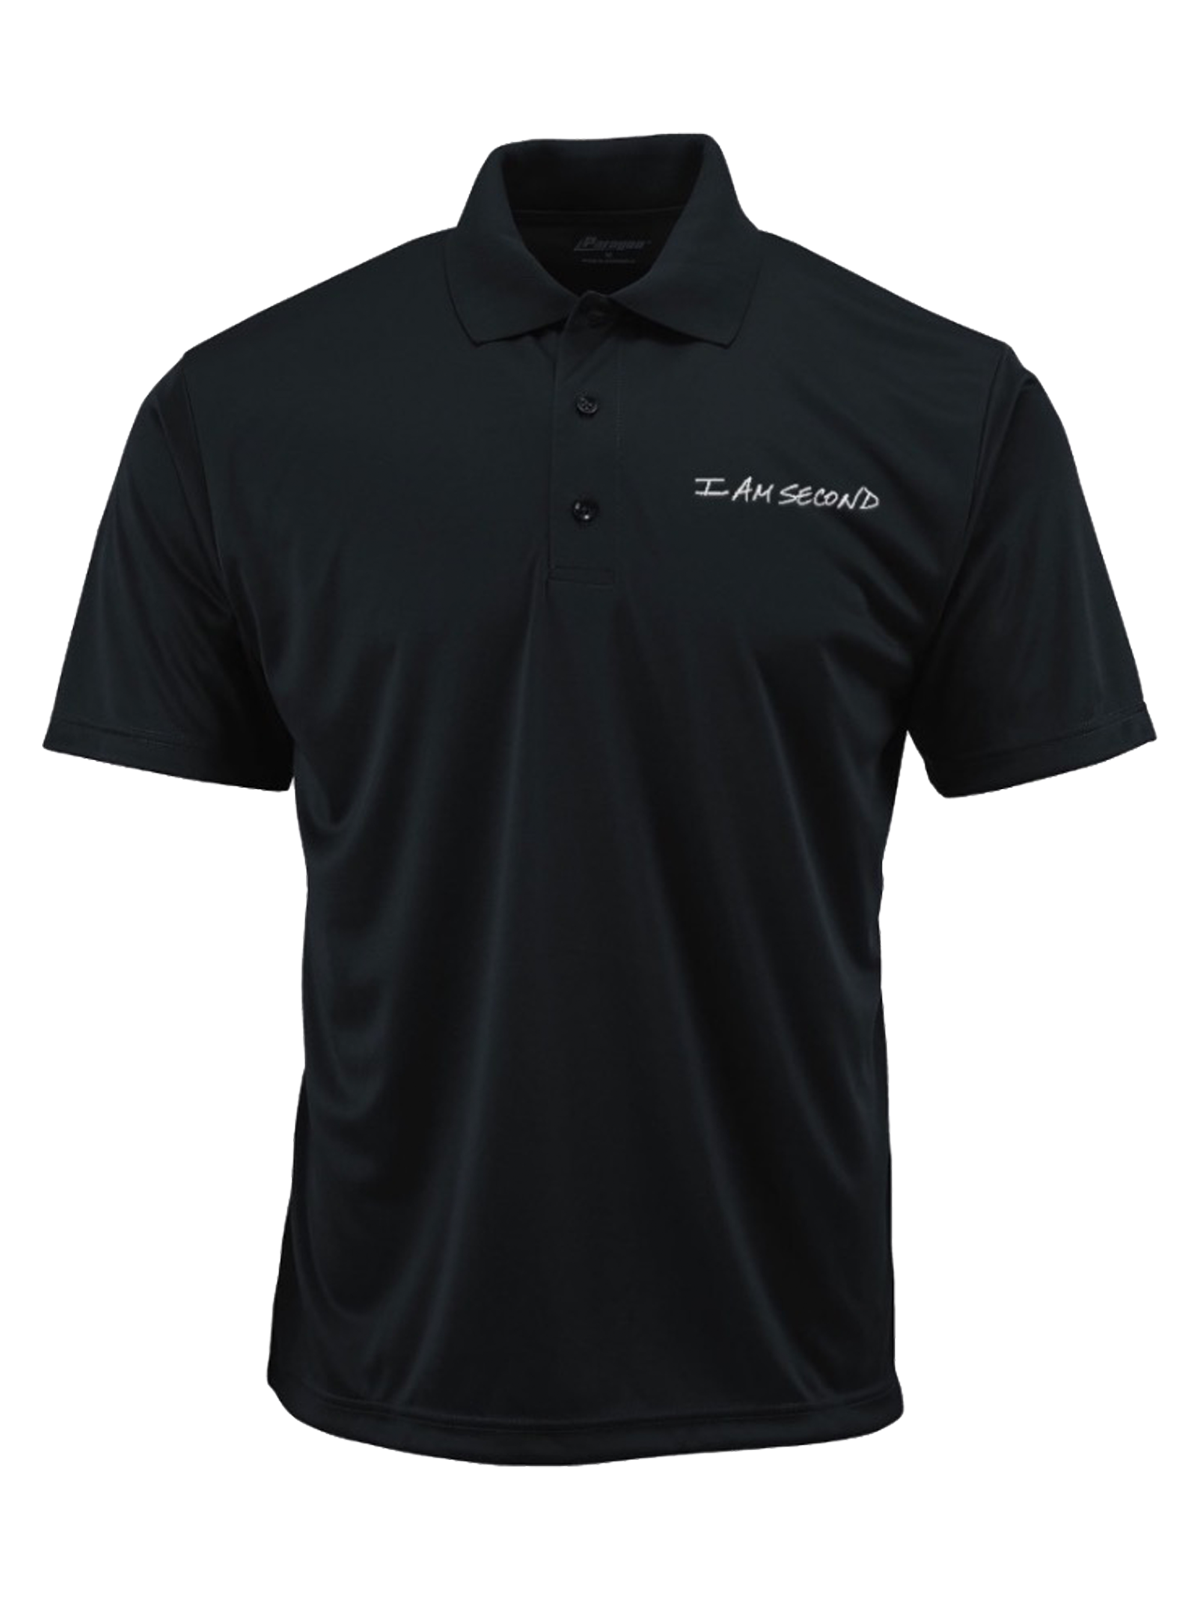 Men's classic logo black performance polo shirt I Am Second